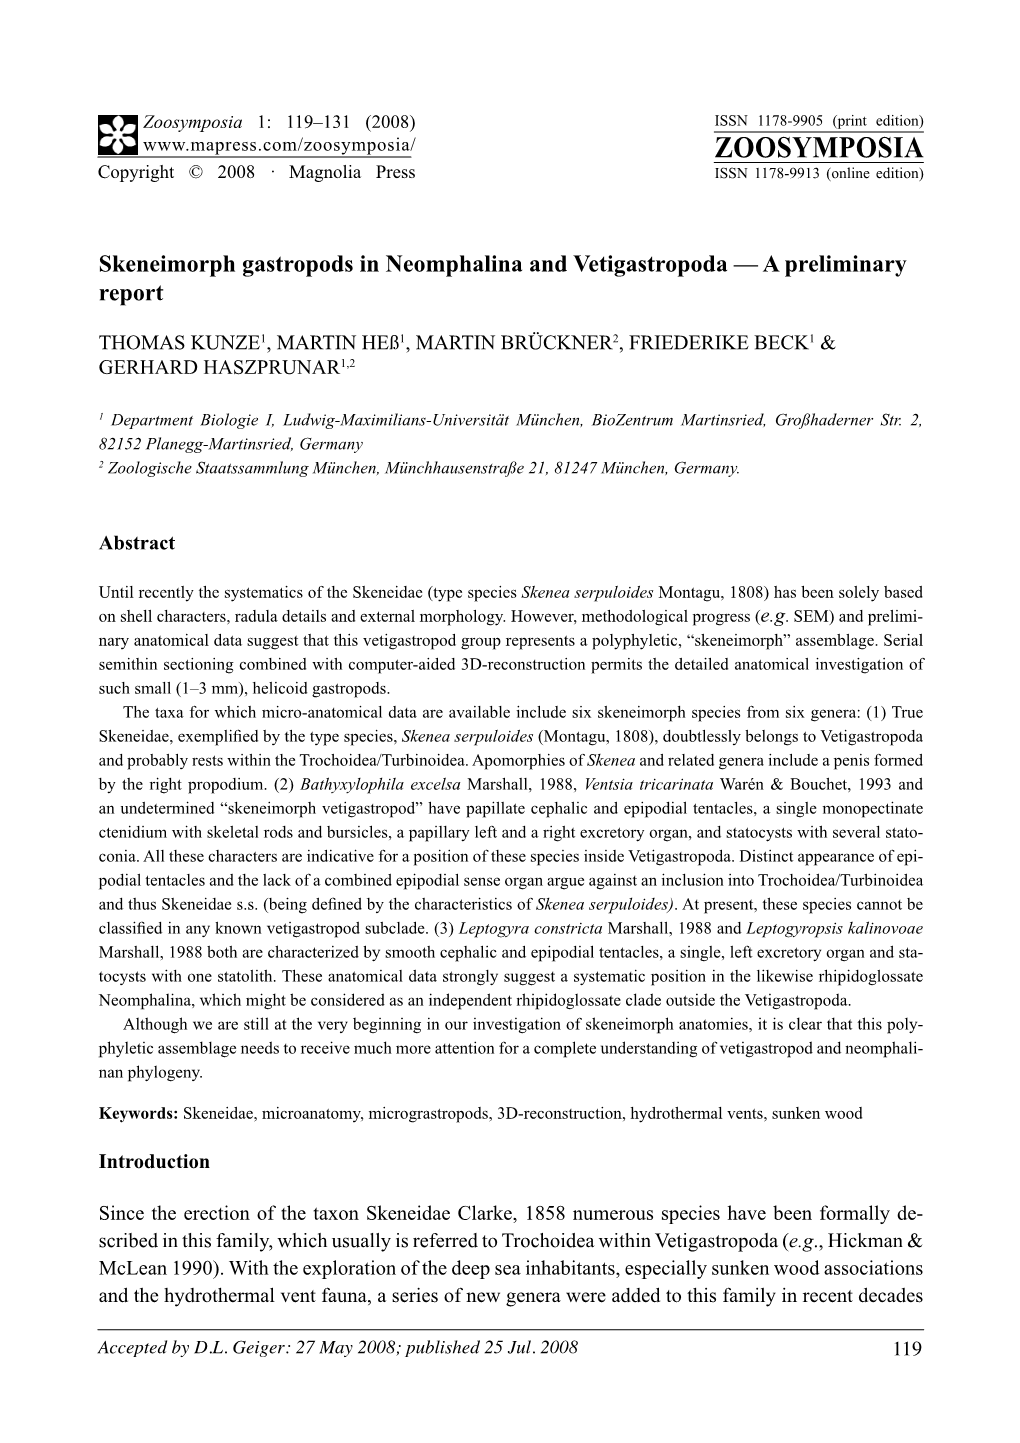 Zoosymposia: Skeneimorph Gastropods in Neomphalina And